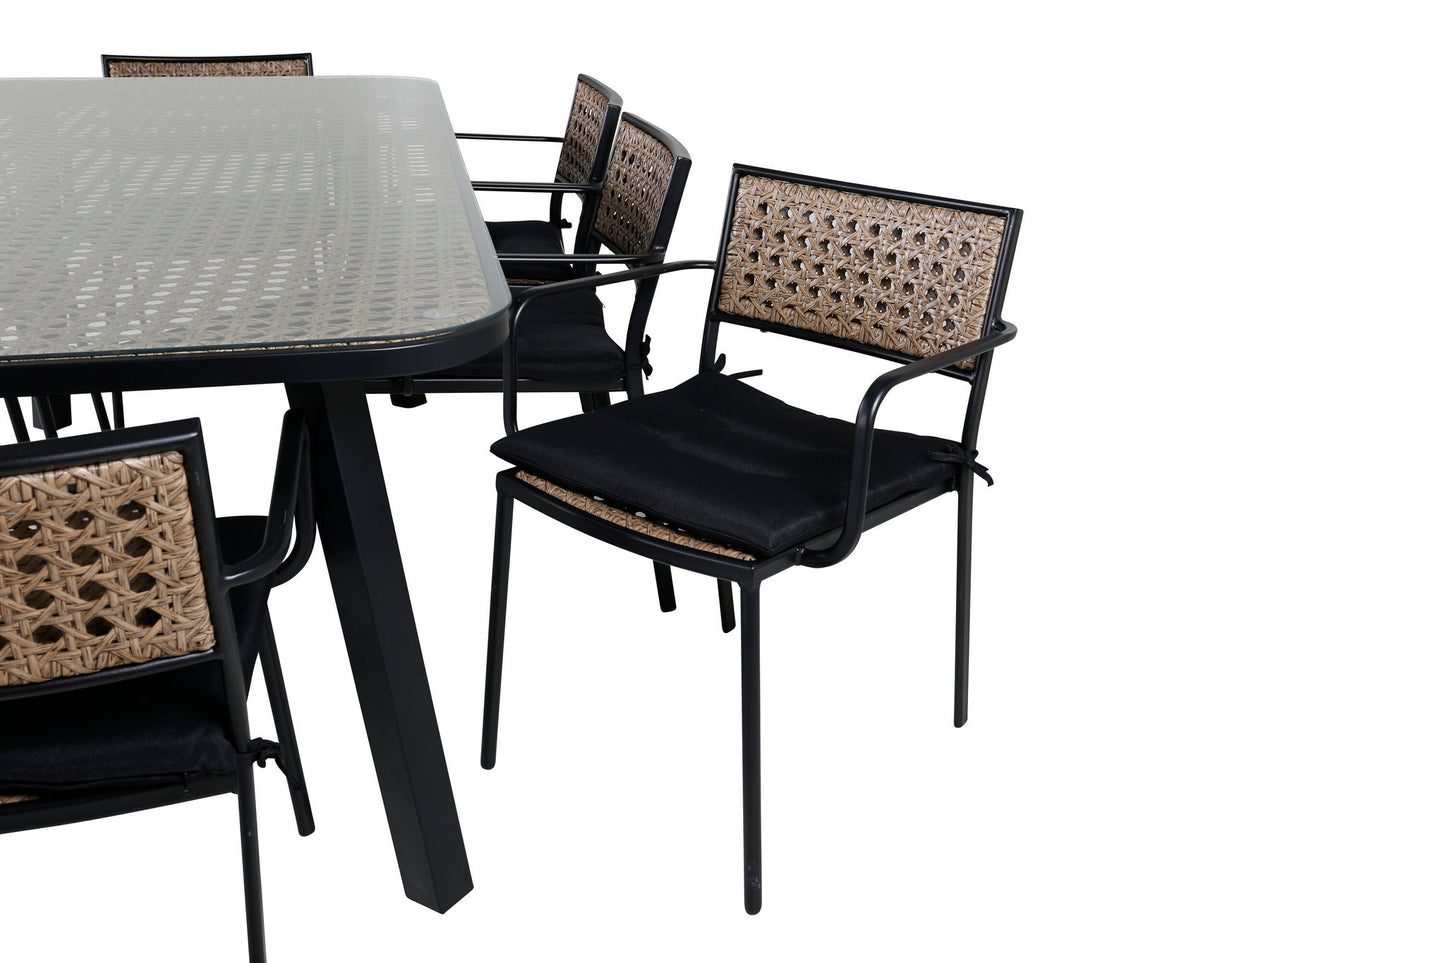 Paola - Spisebord, Sort Stål / Natur flet - 200*100+ Paola Spisebordsstol - Sort Stål / Natur flet / Sort hynde